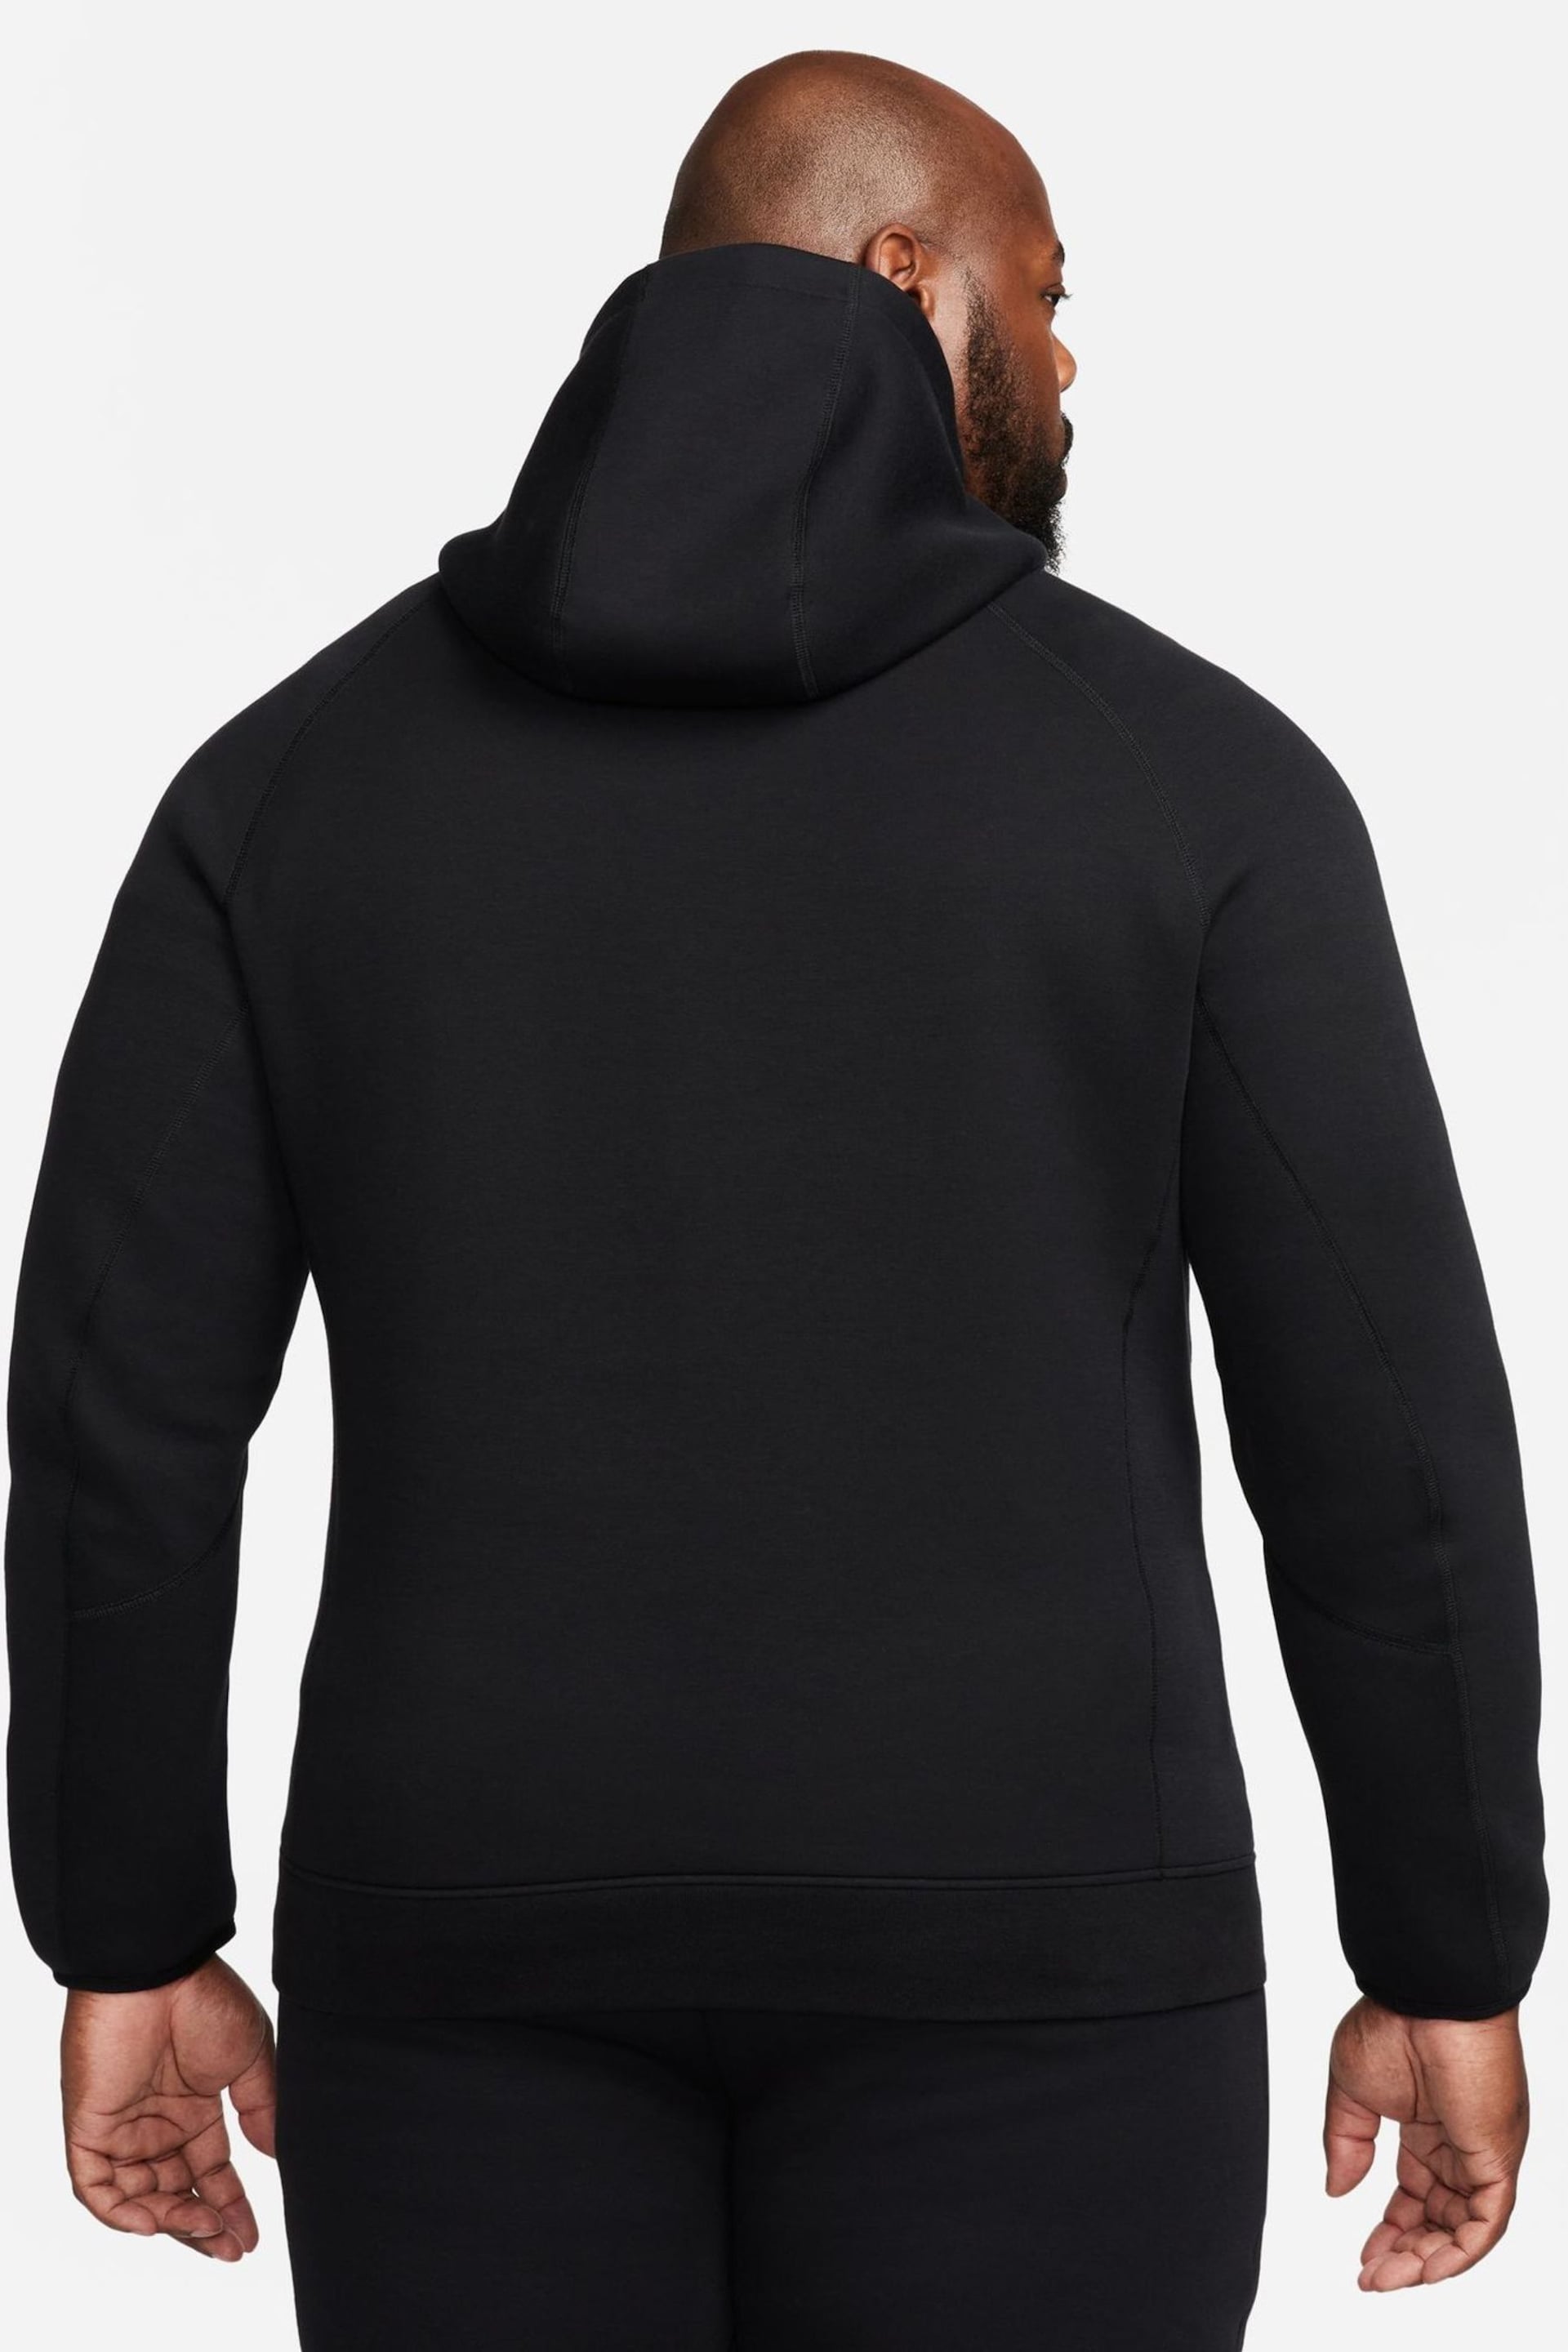 Nike Black Tech Fleece Pullover Hoodie - Image 7 of 16